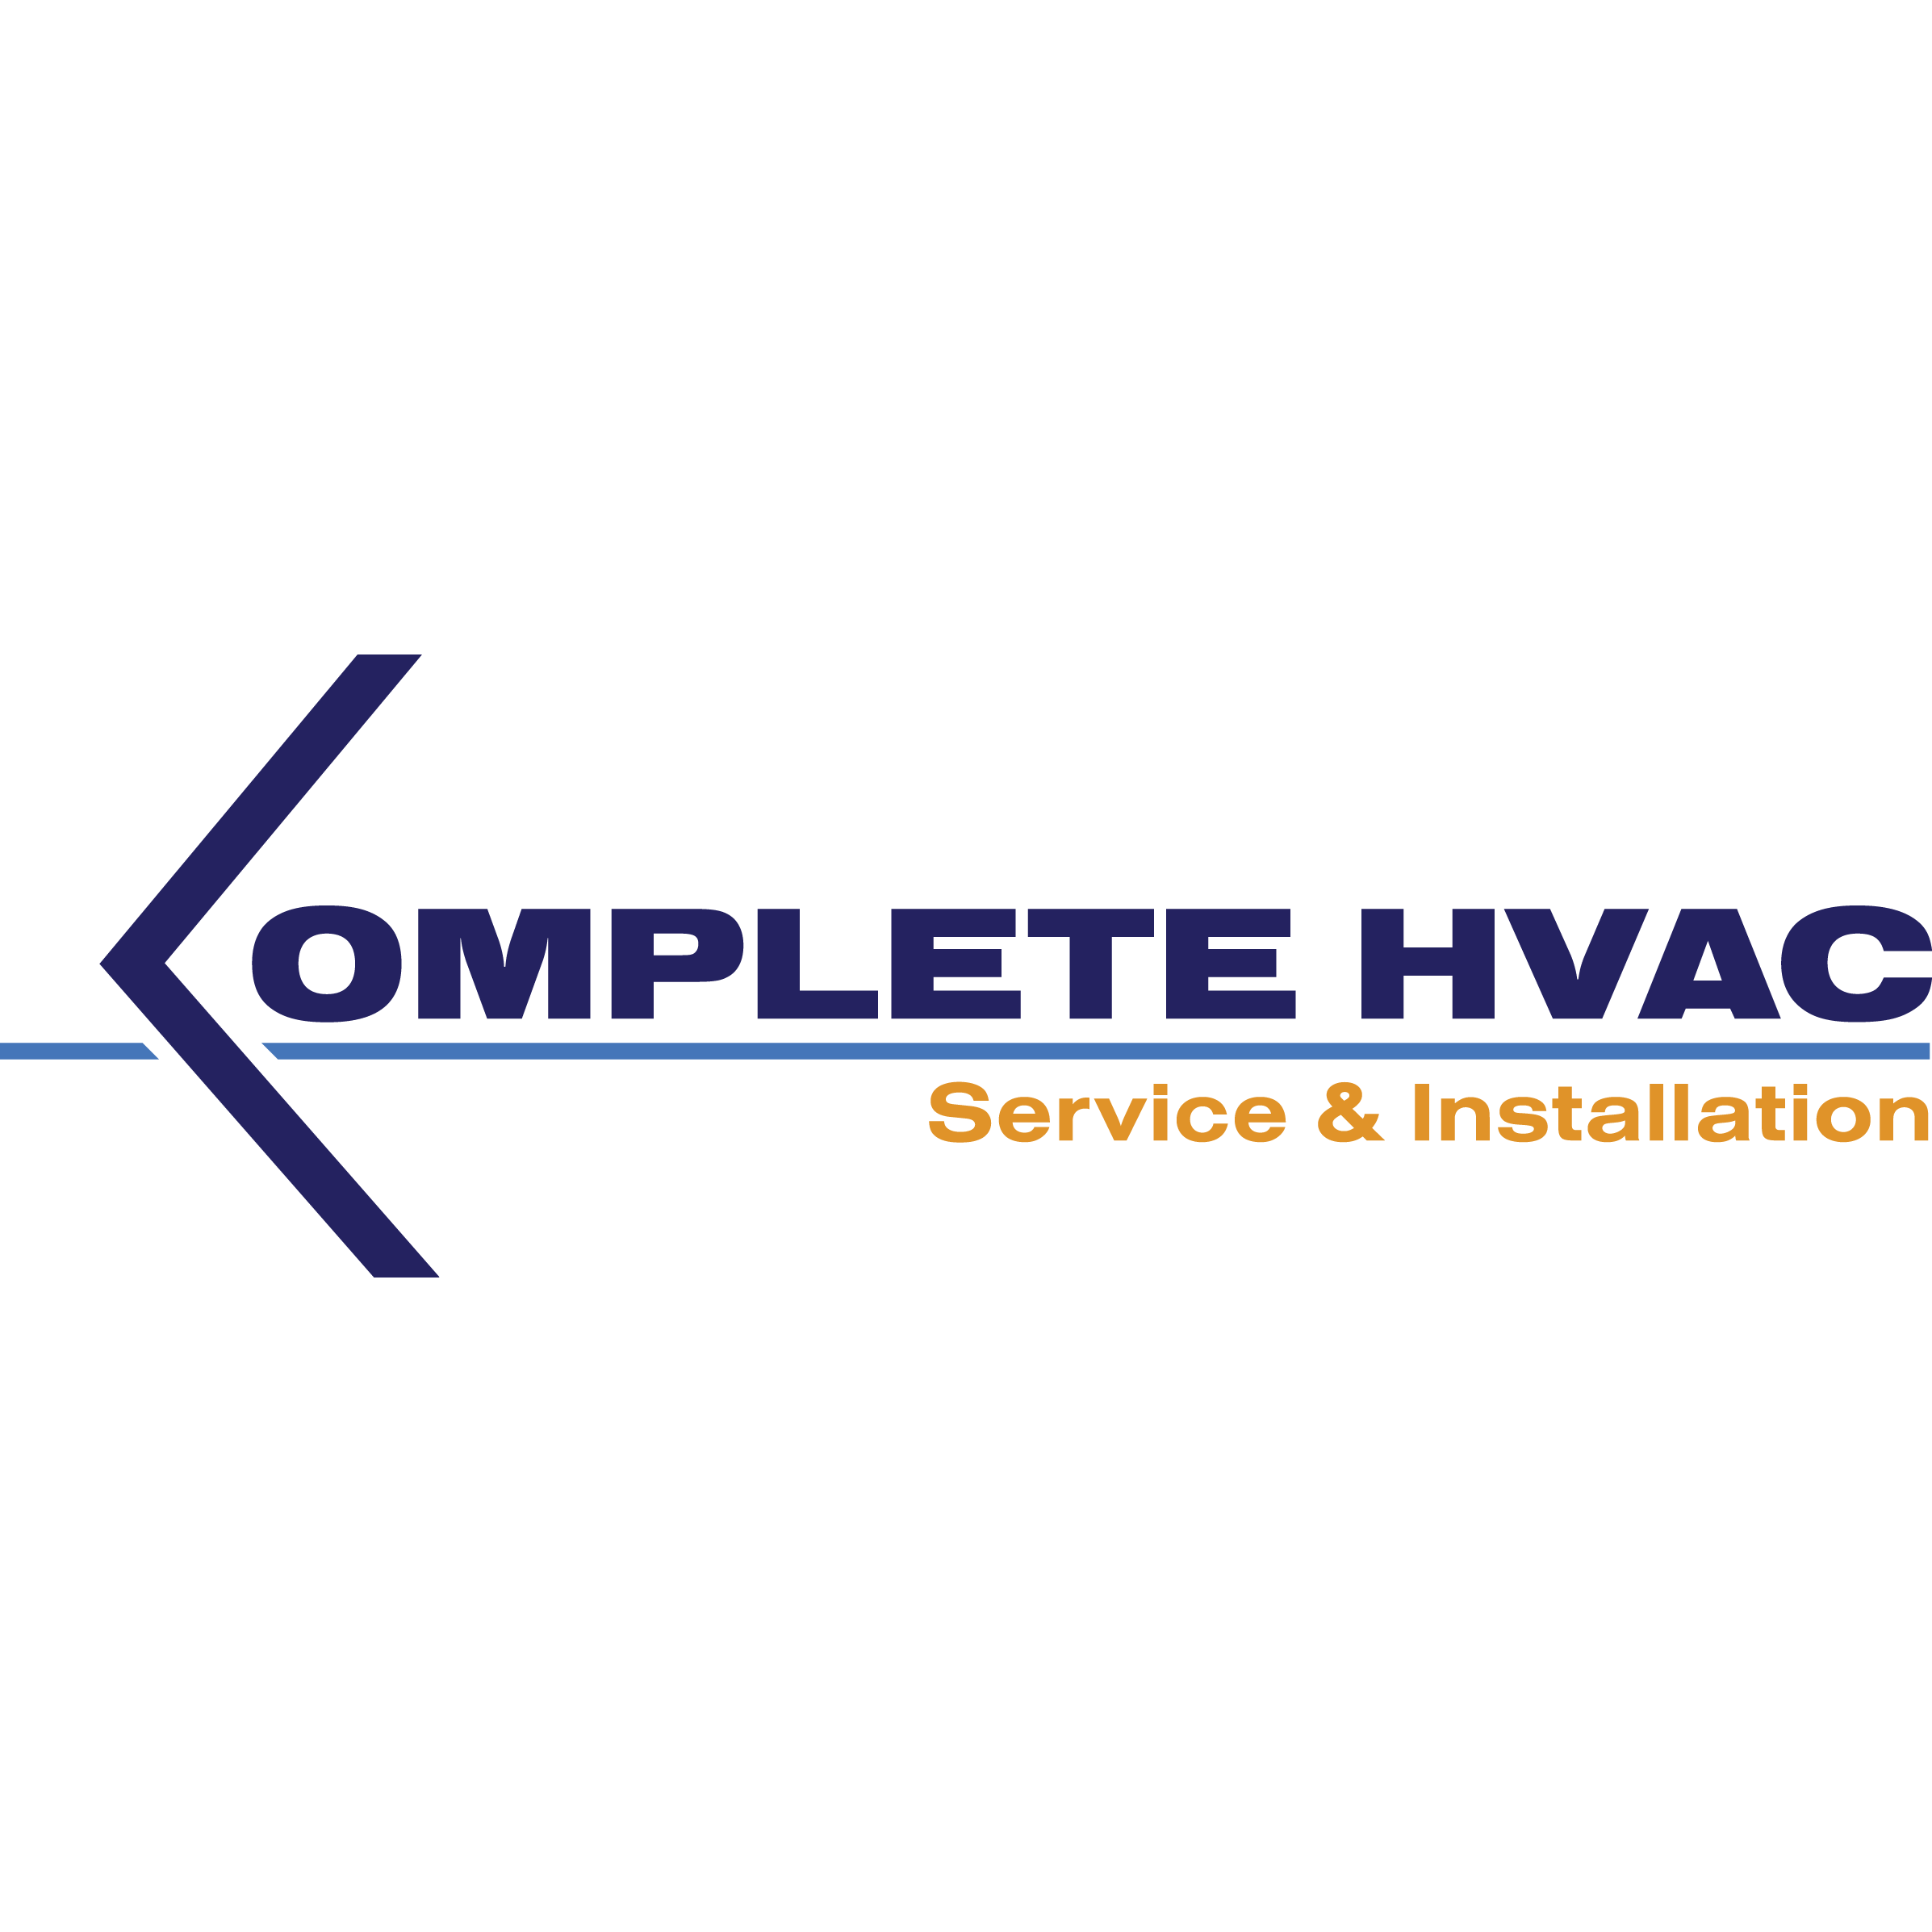 Complete HVAC Service & Installation - Rapid City, SD 57703 - (605)341-3489 | ShowMeLocal.com